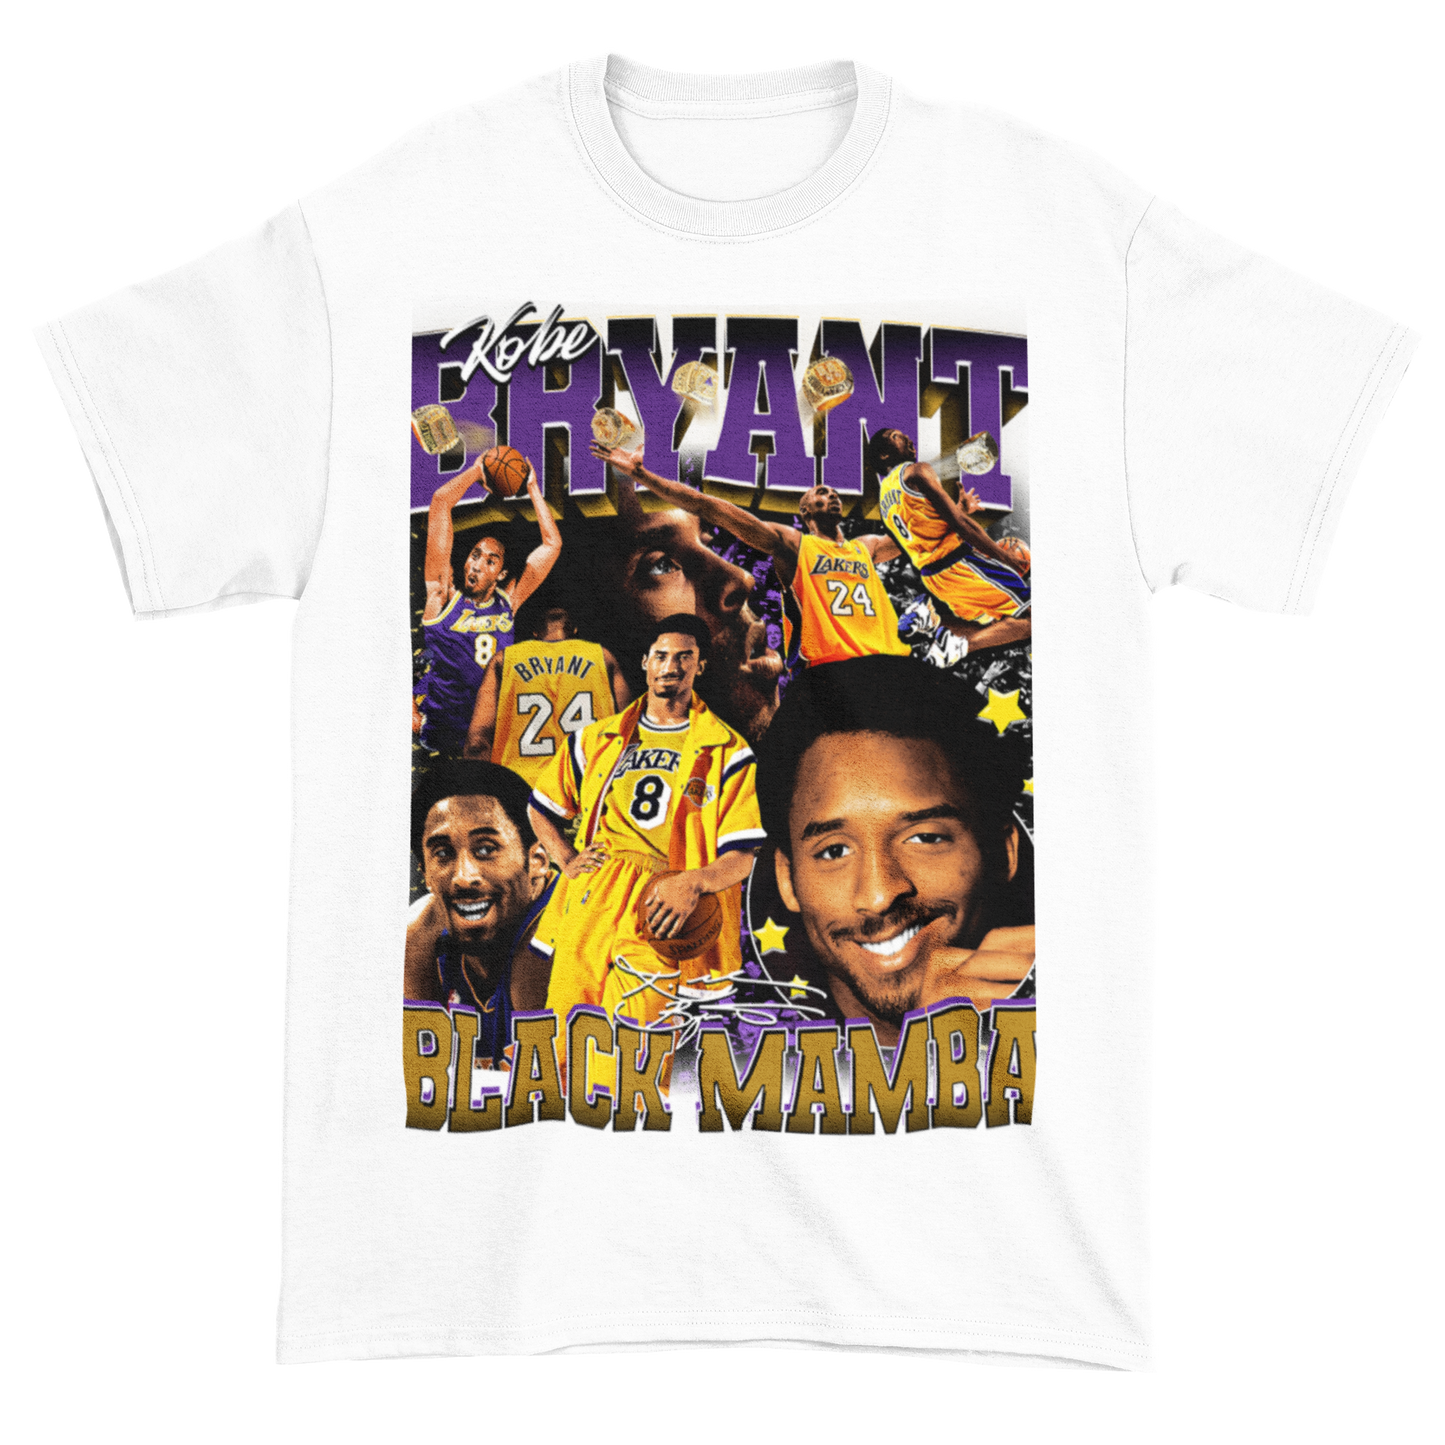 Mamba Mentality Lives On: Kobe Tribute Graphic T-Shirt